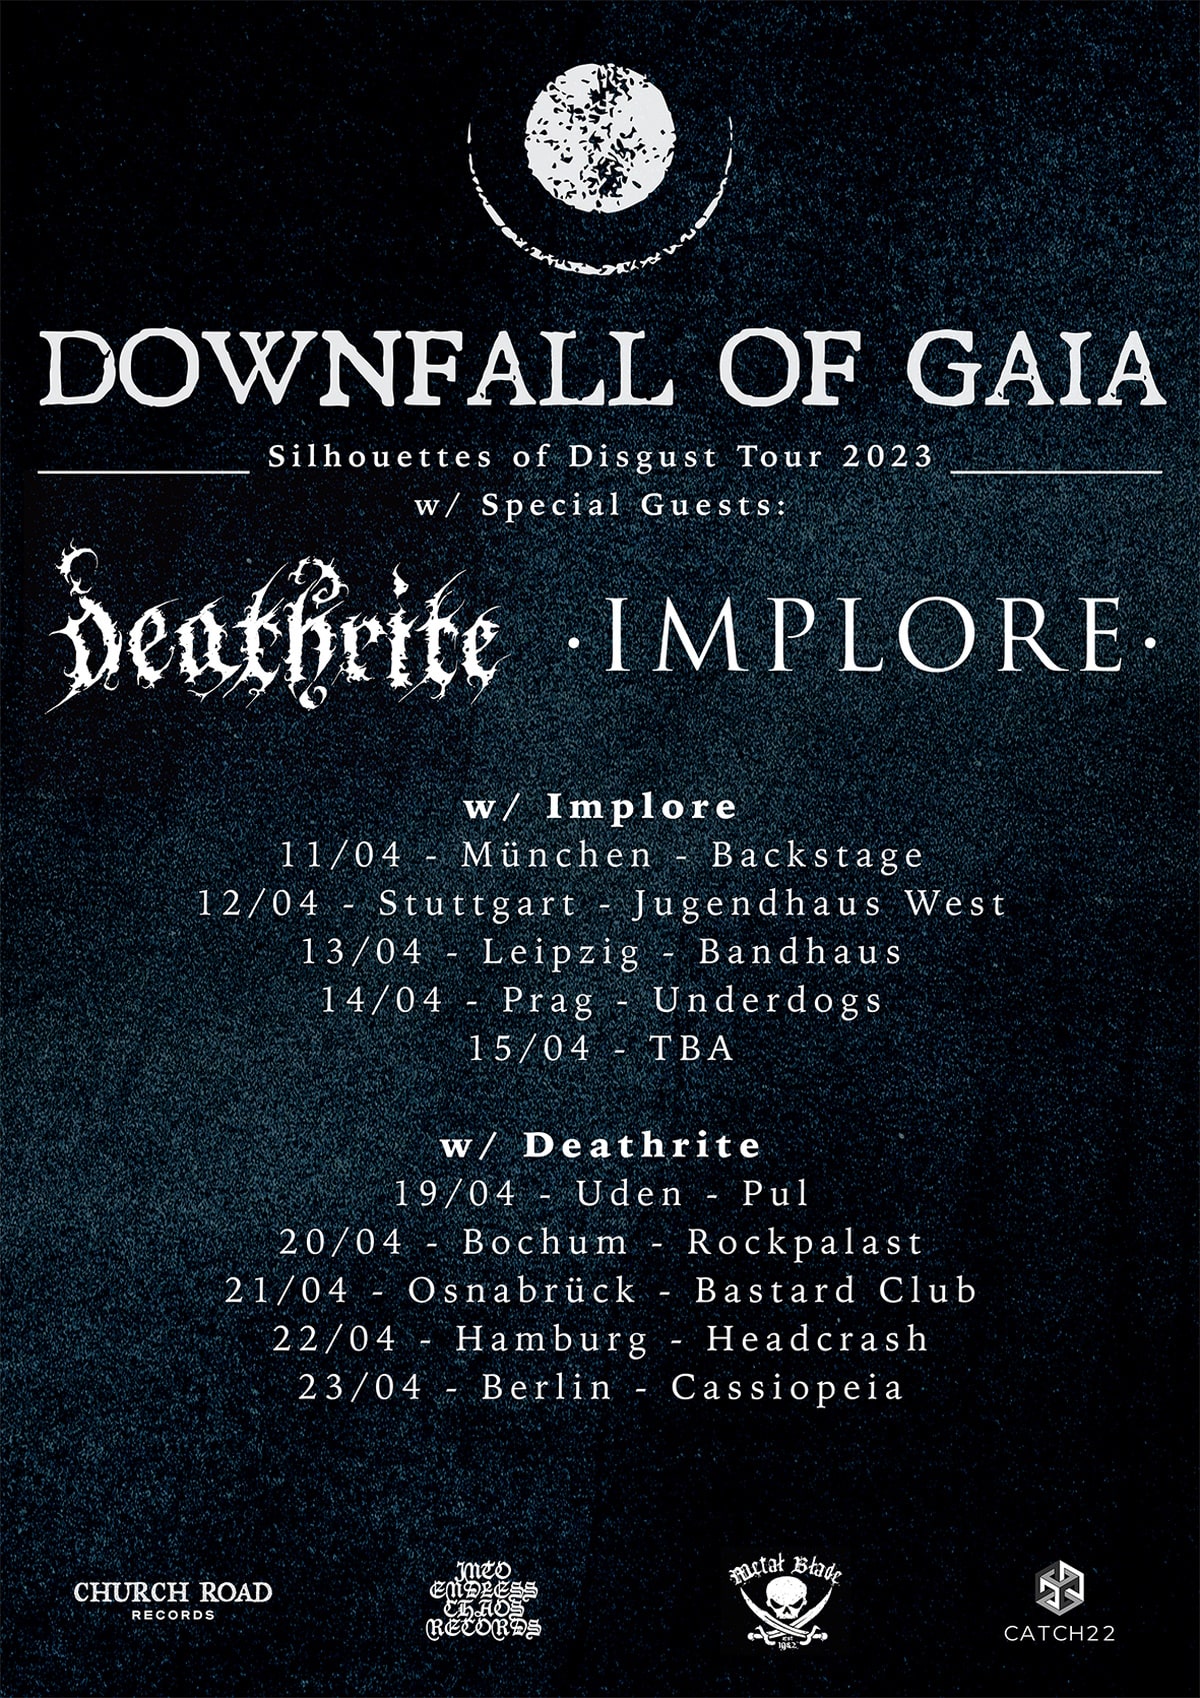 Downfall of Gaia tour 